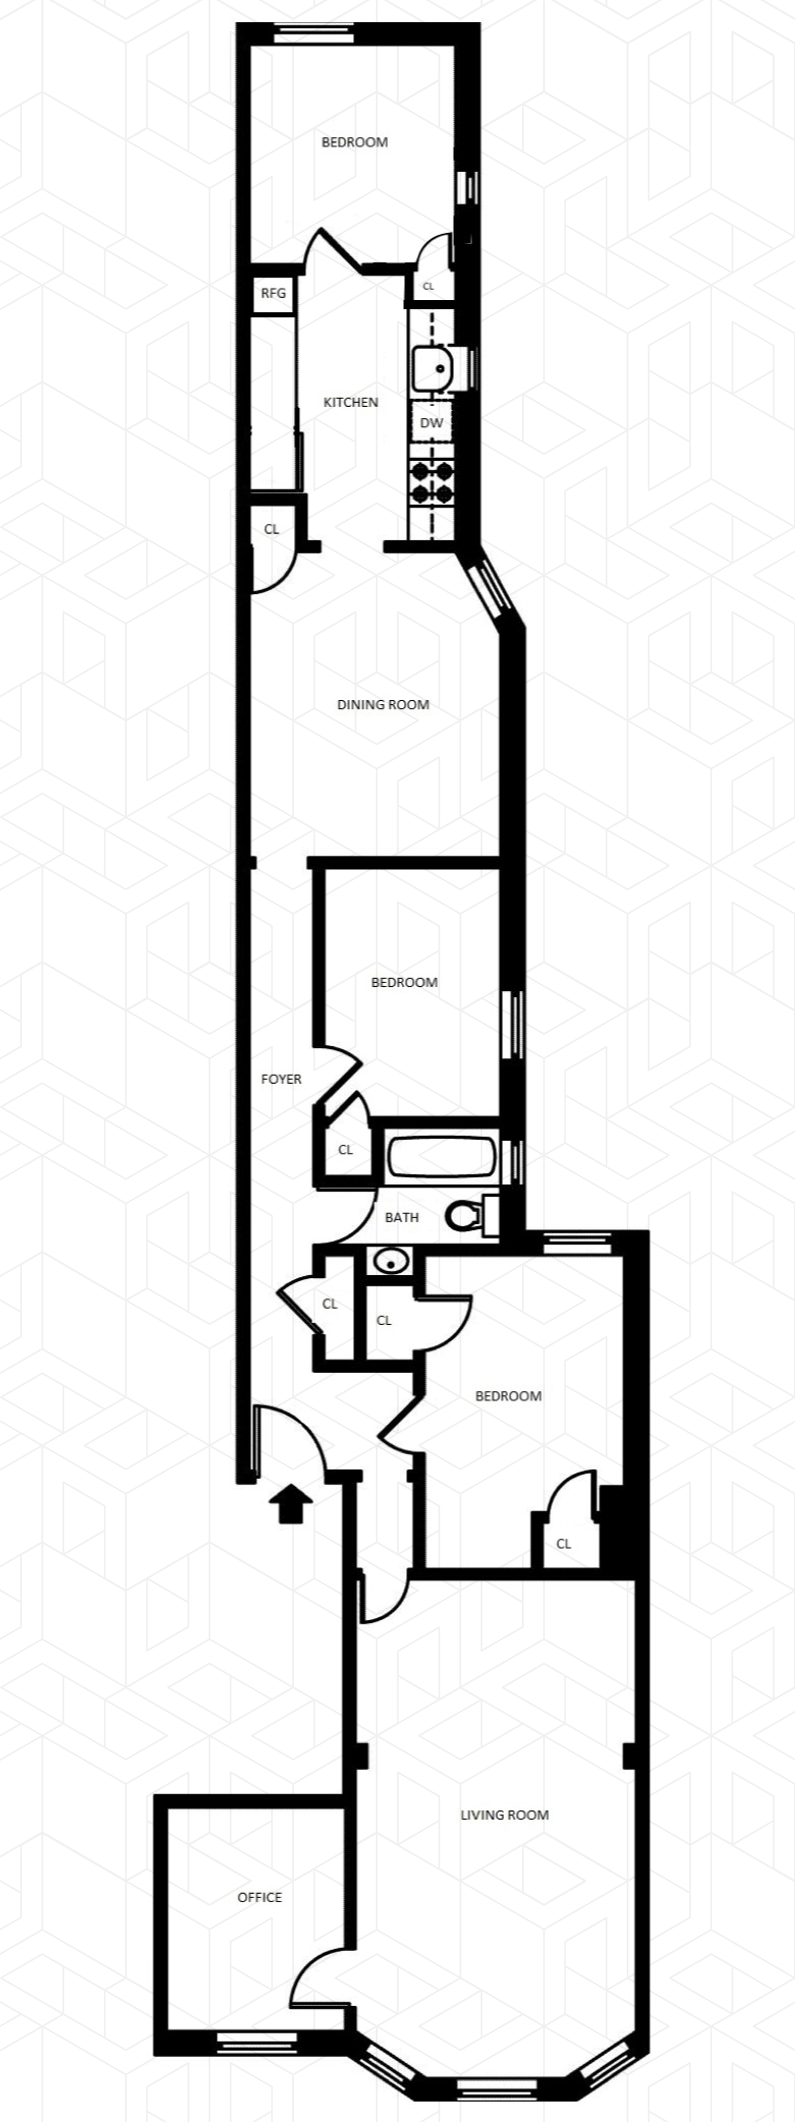 Floorplan for 207 St James Place, 2R